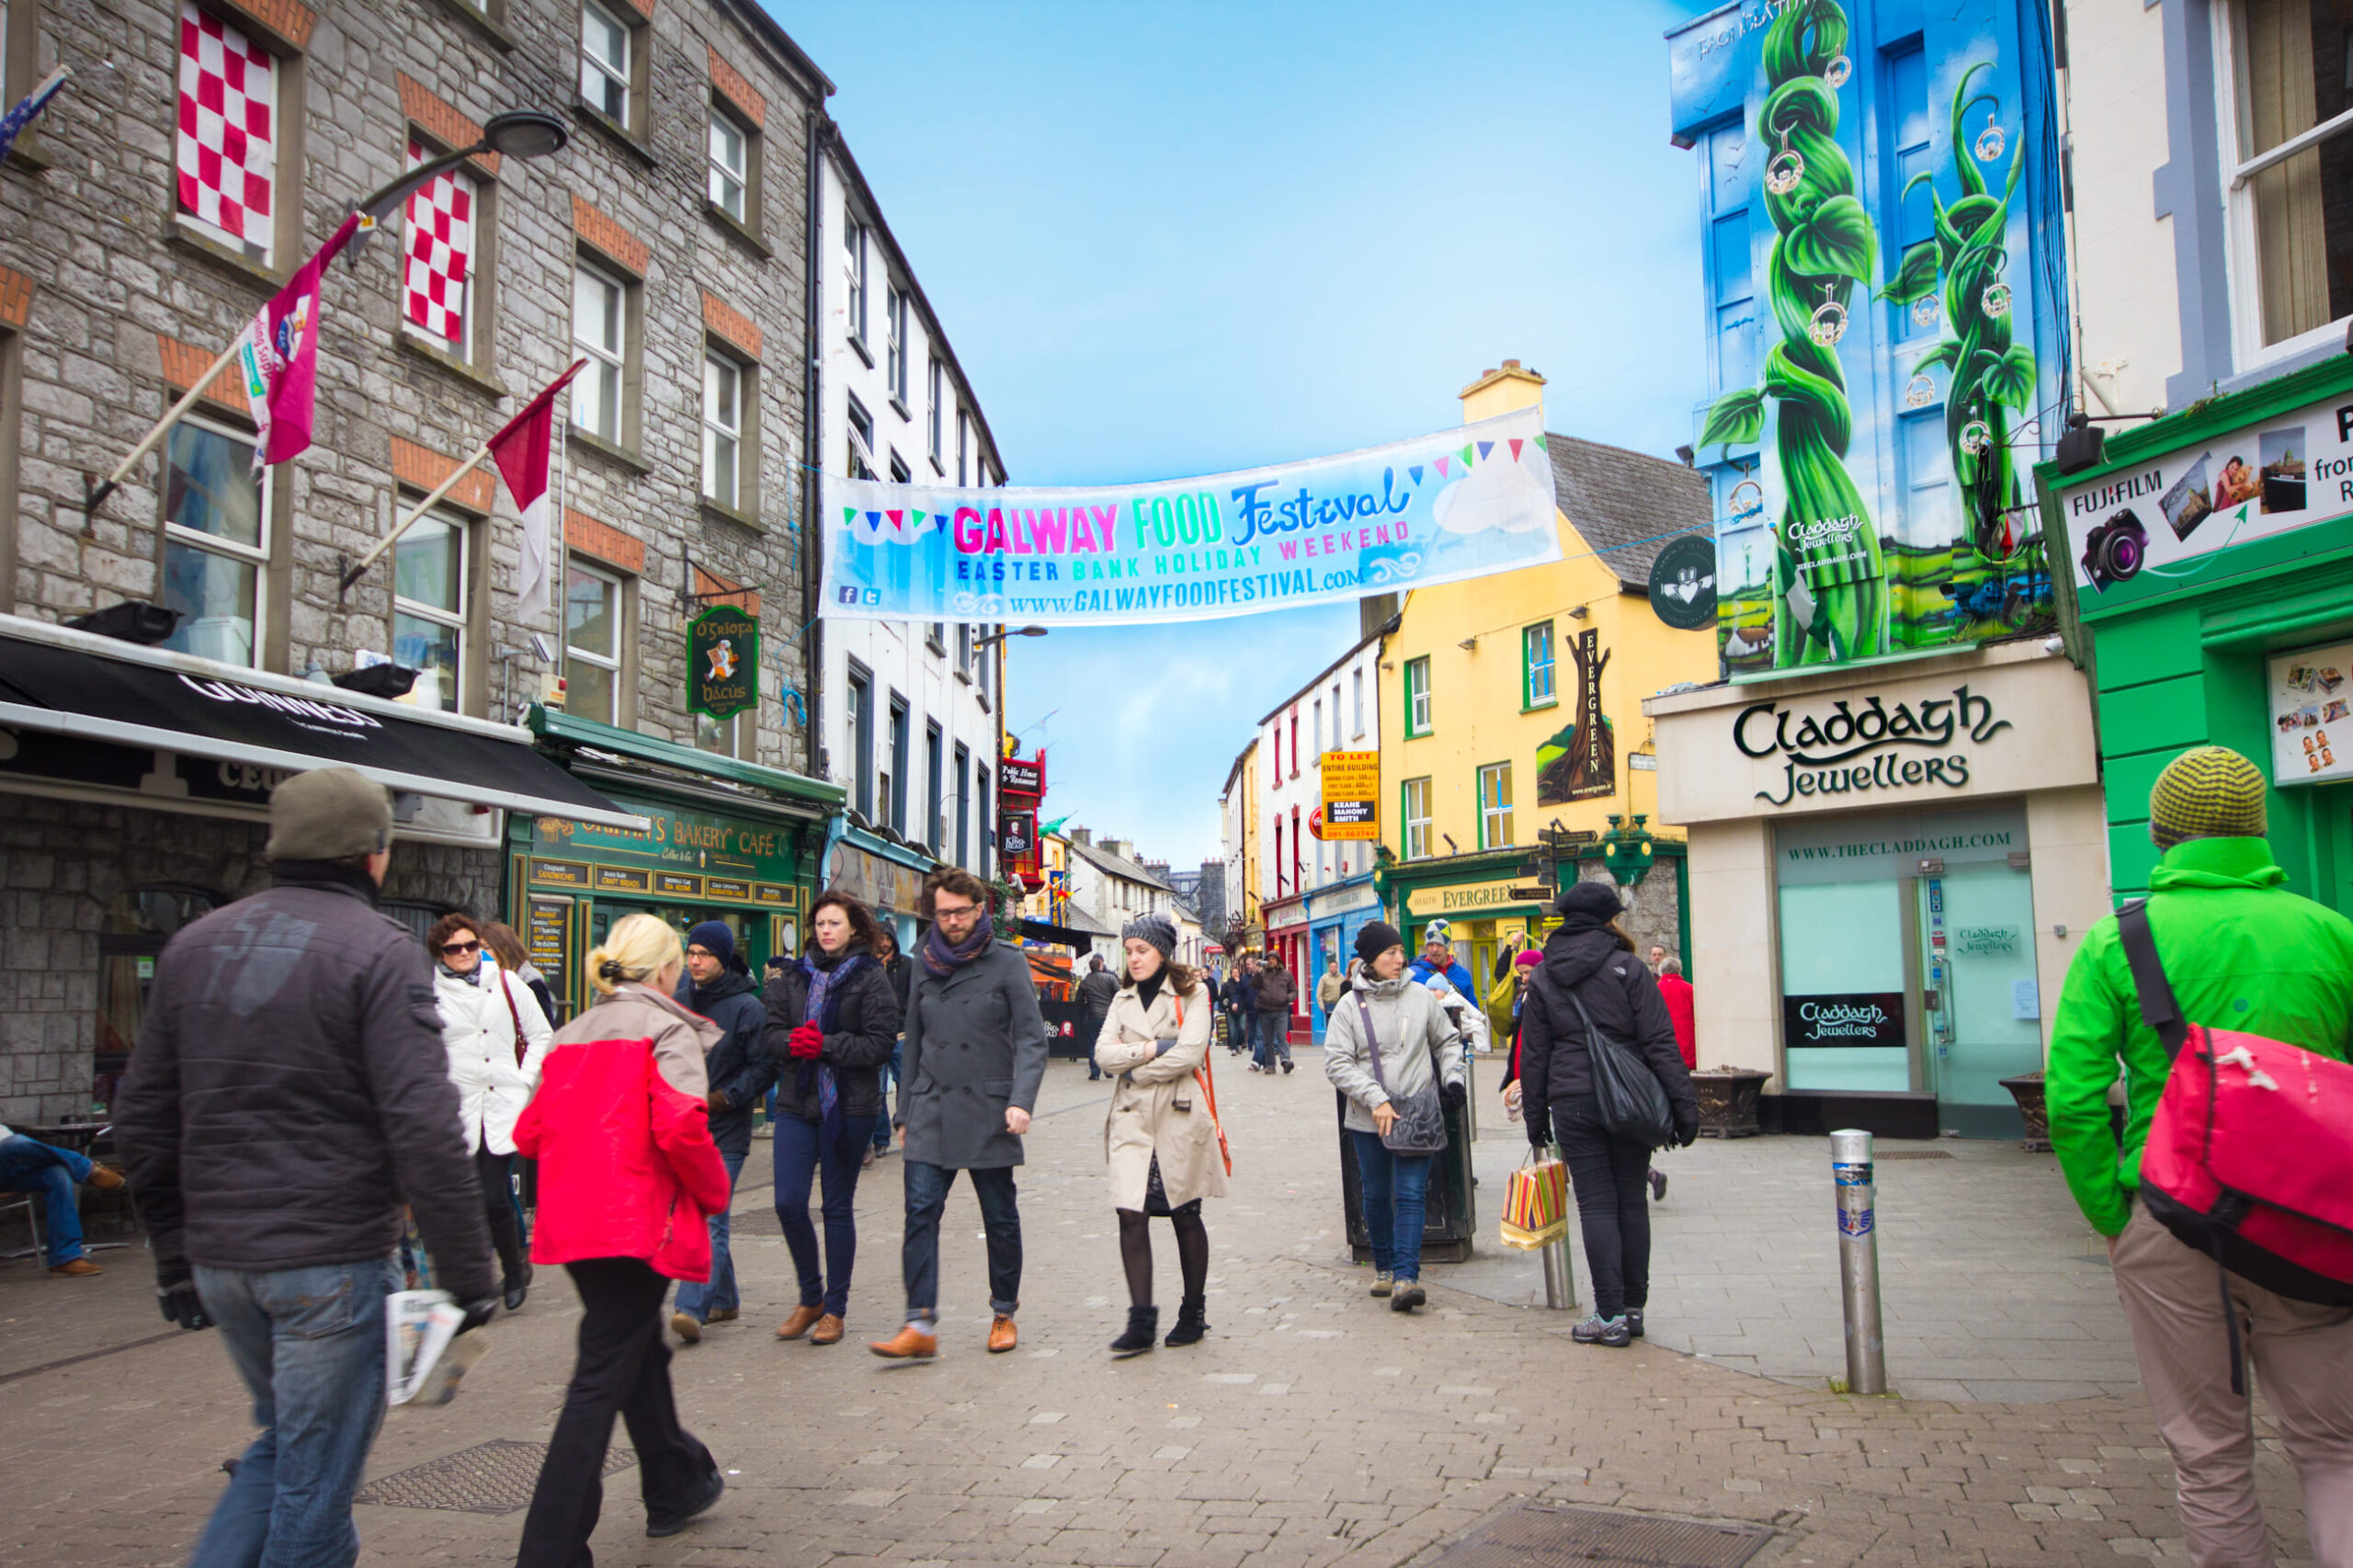 GALWAY, IRELAND - MAR 31: Street scene in historic Galway City Ireland on Mar 31, 2013